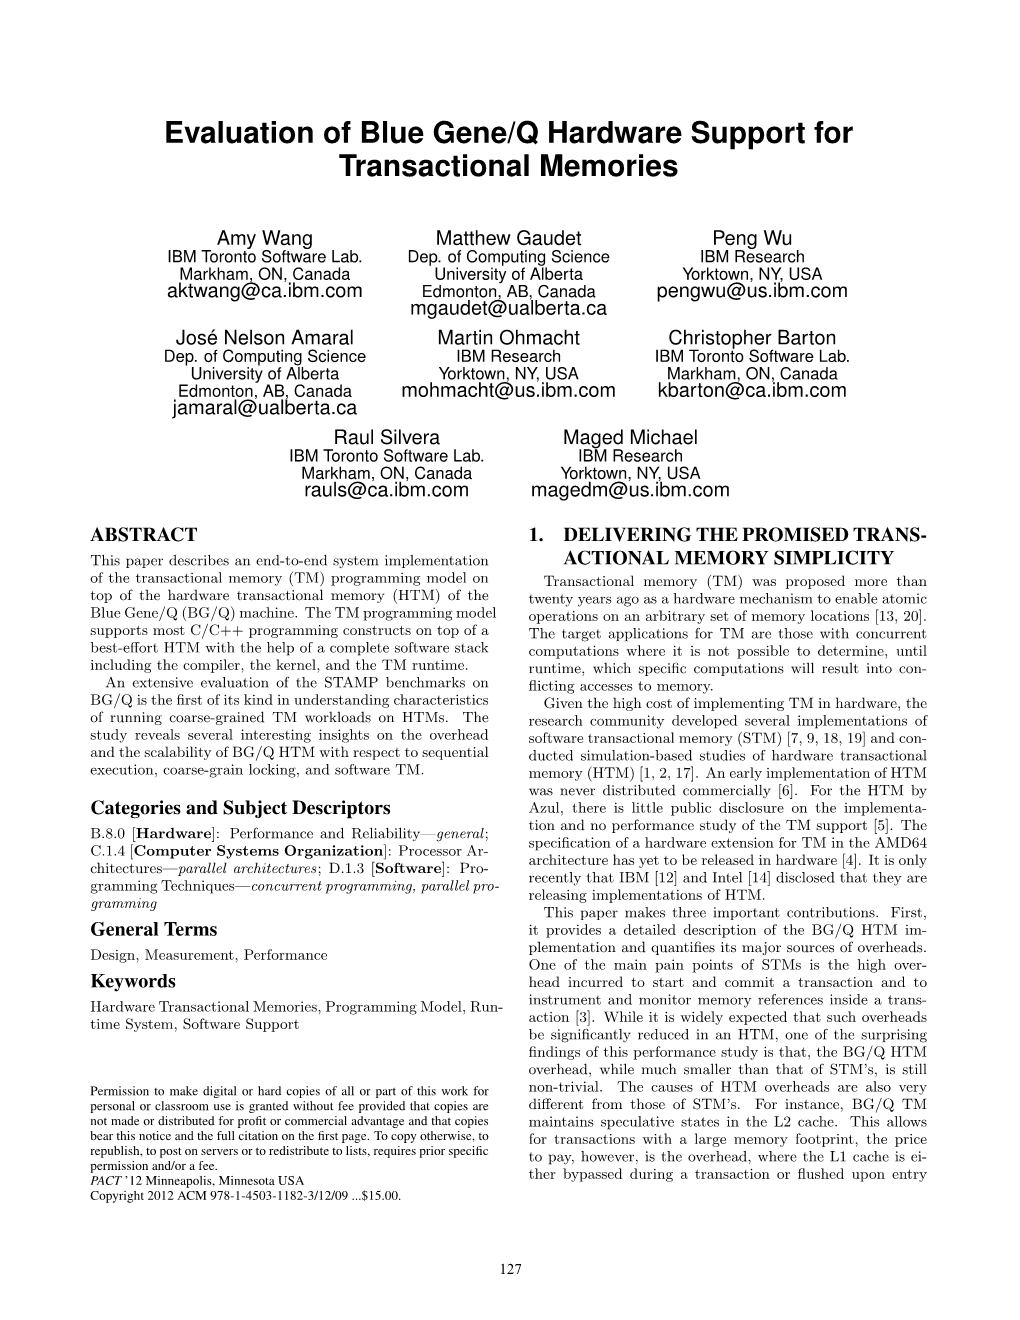 Evaluation of Blue Gene/Q Hardware Support for Transactional Memories